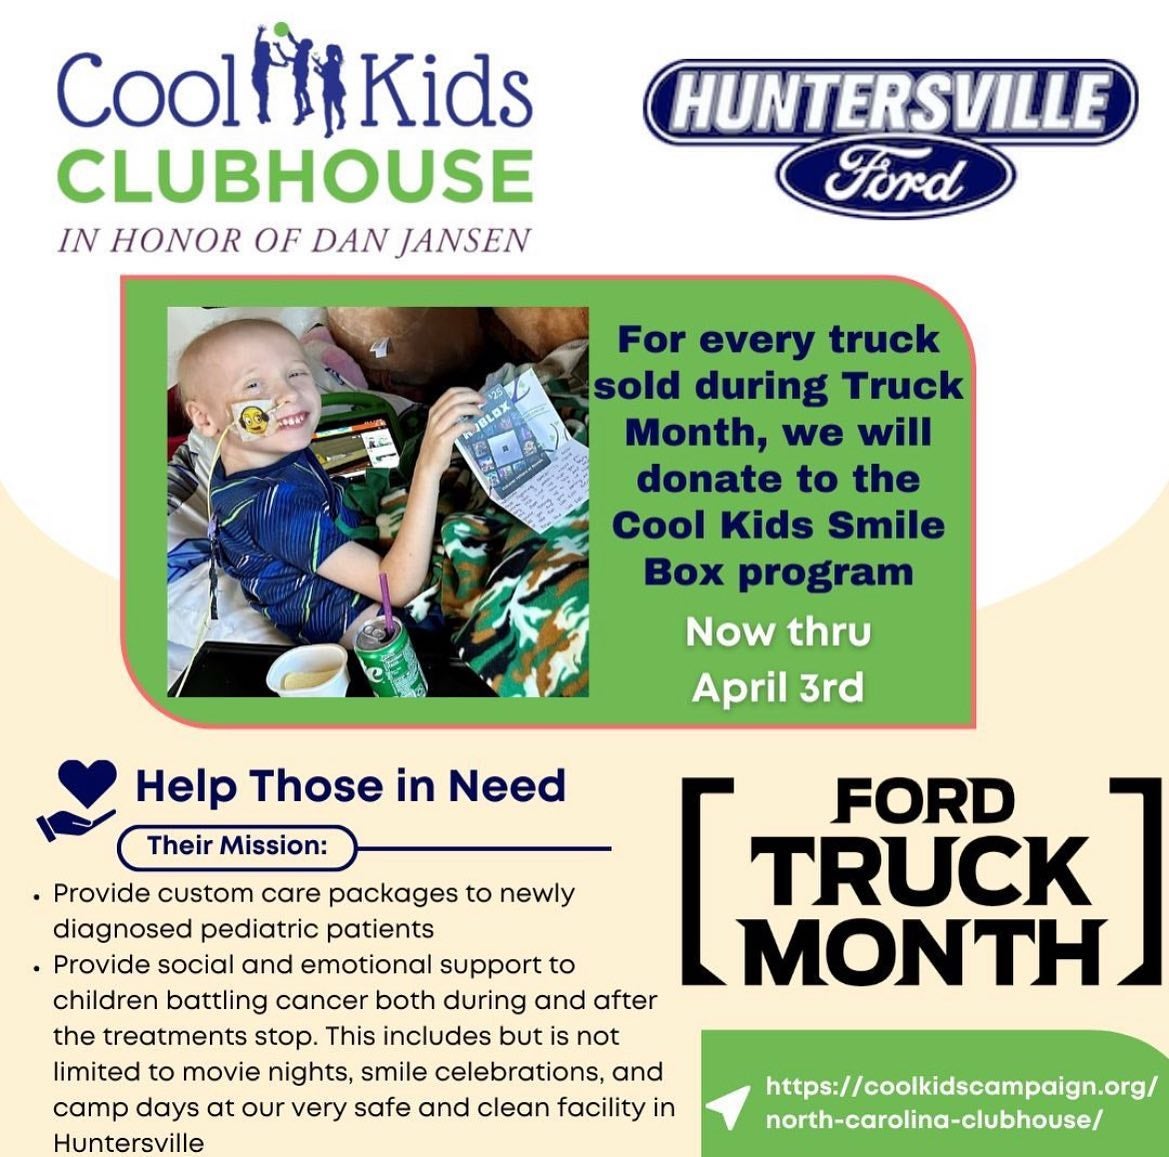 Huntersville Ford | Community Involvement